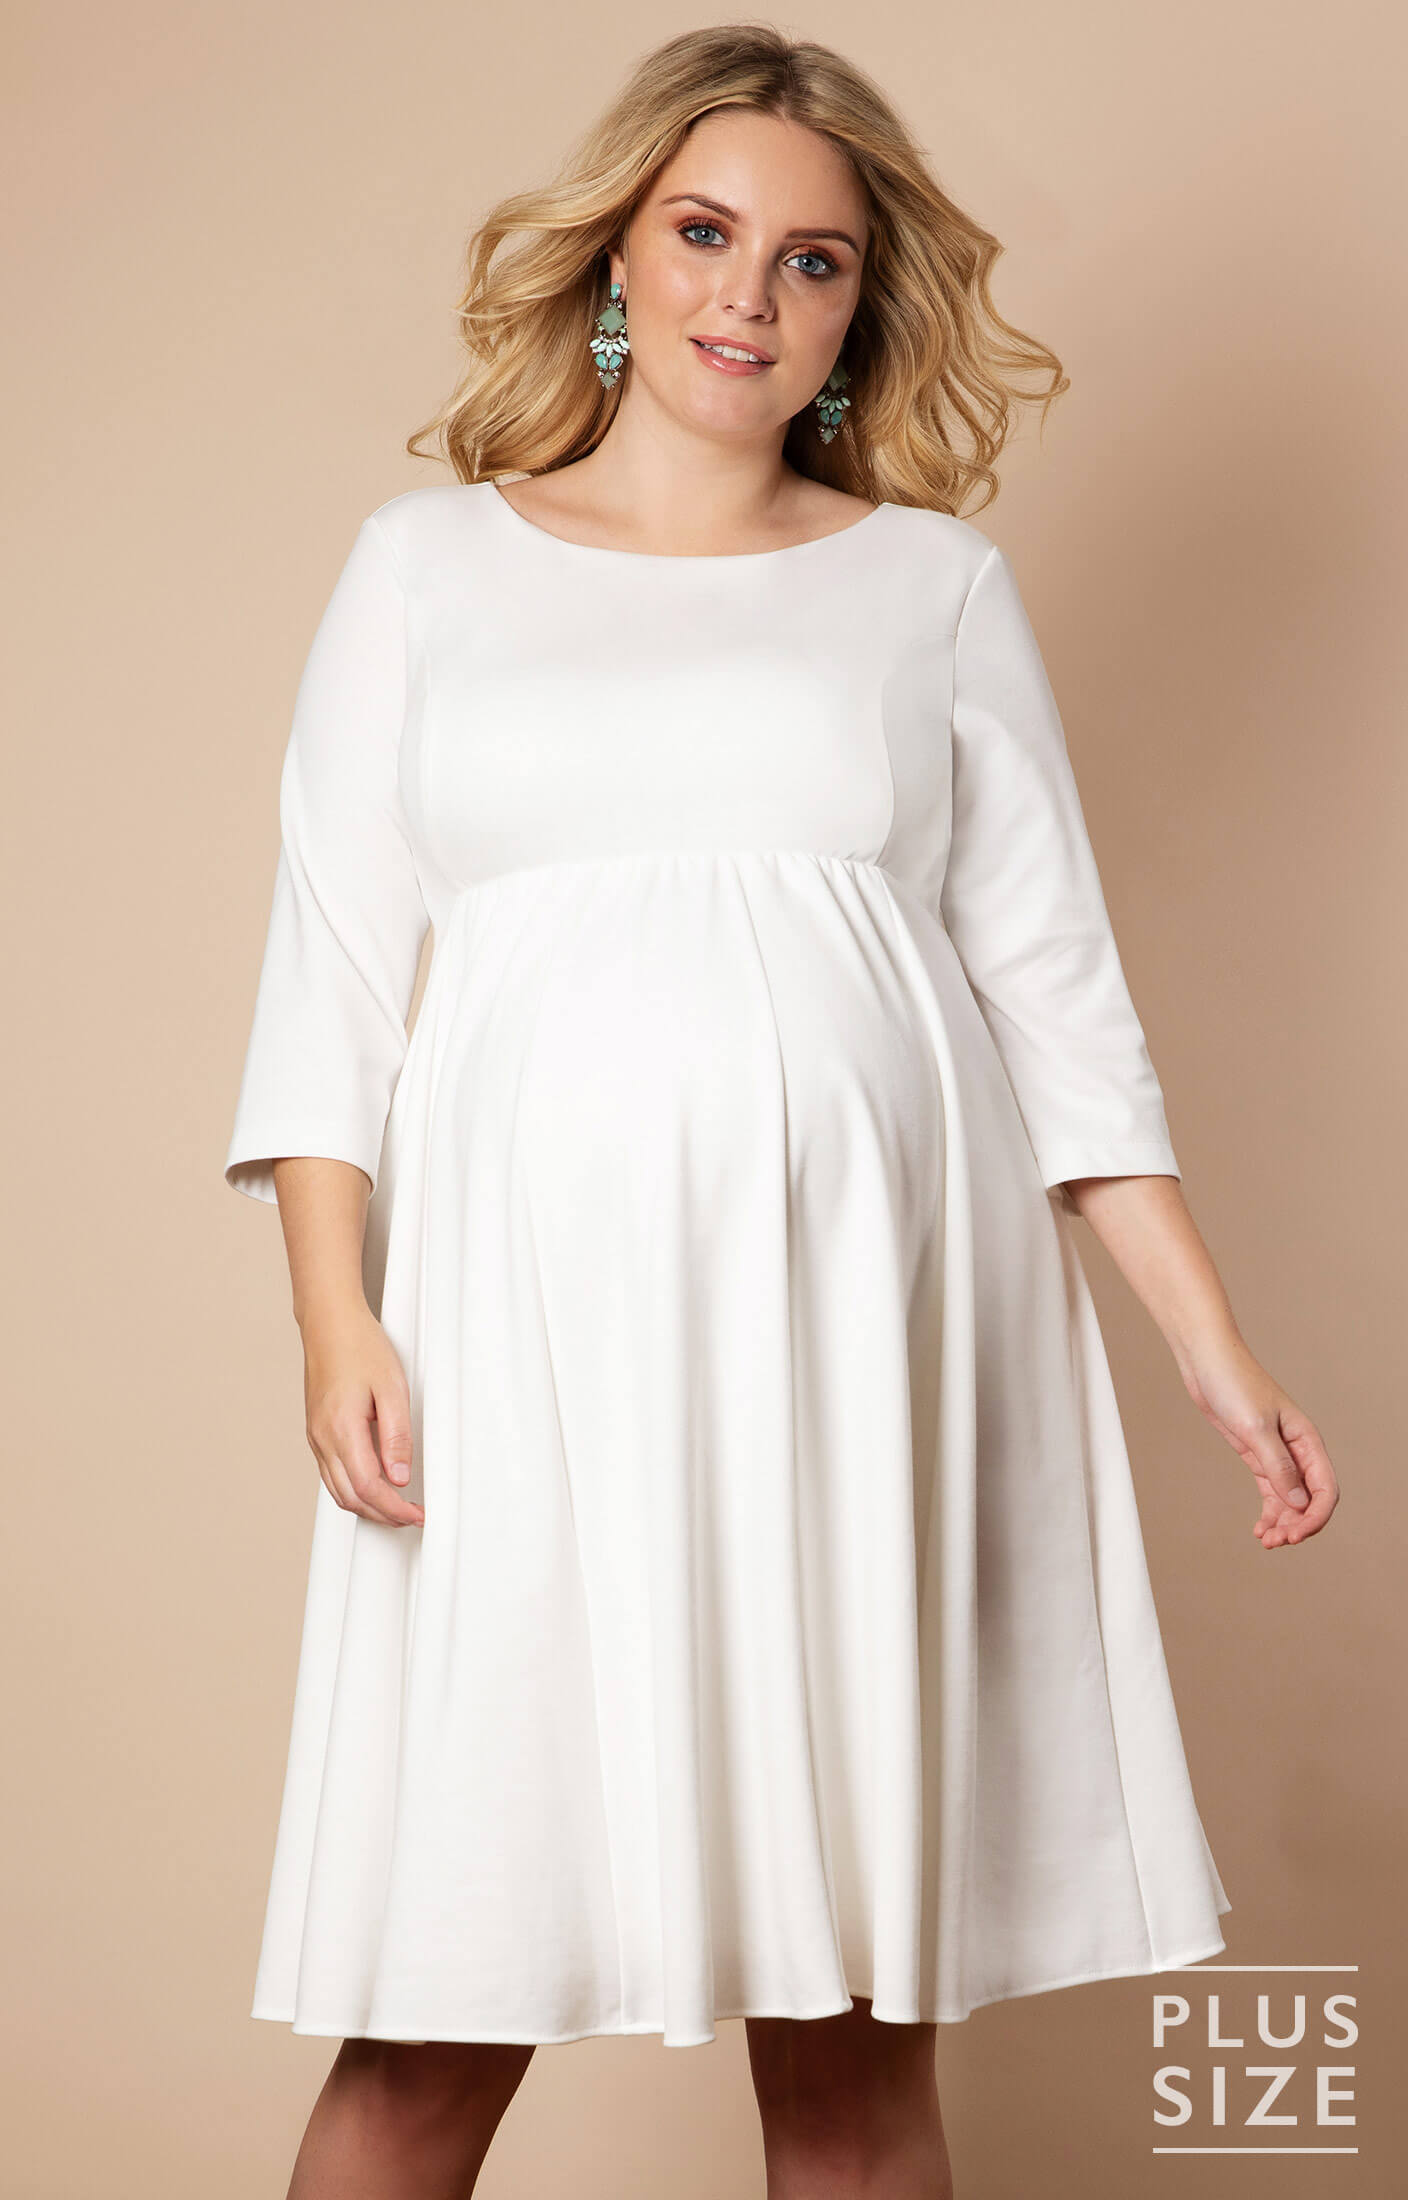 Mia Plus Size Maternity Dress Ivory